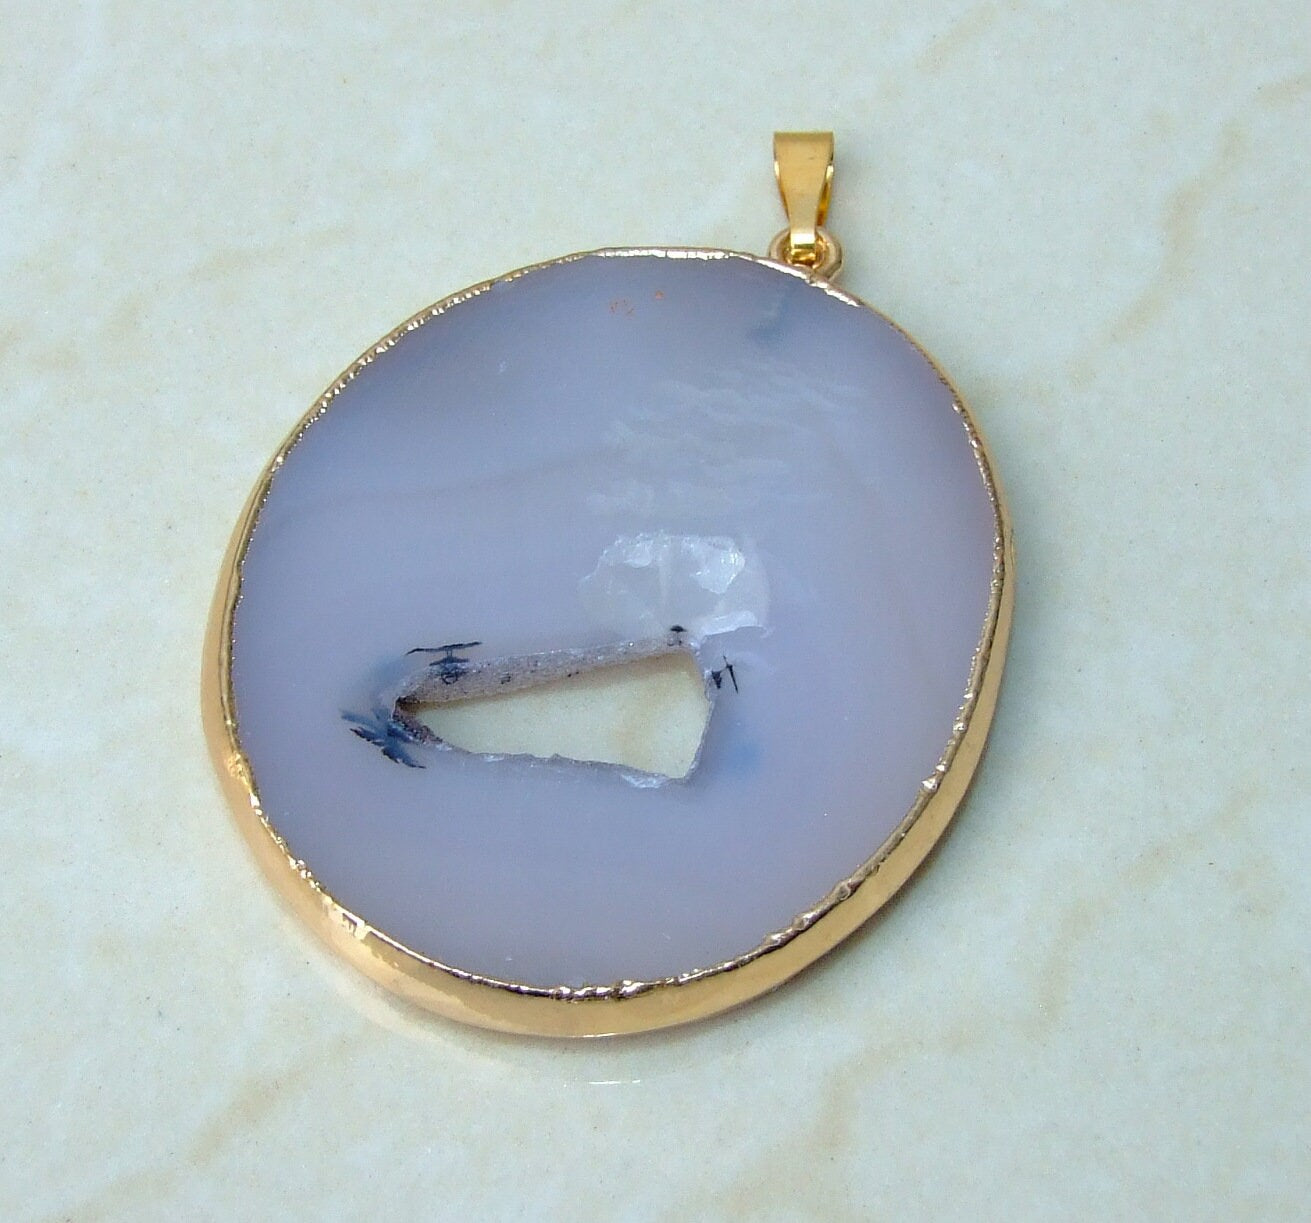 Large Natural Agate Druzy Pendant, Gemstone Pendant, Gold Plated Edge, Agate Slice Pendant, Jewelry Stone Pendant, BOHO - 47mm x 55mm - 6901